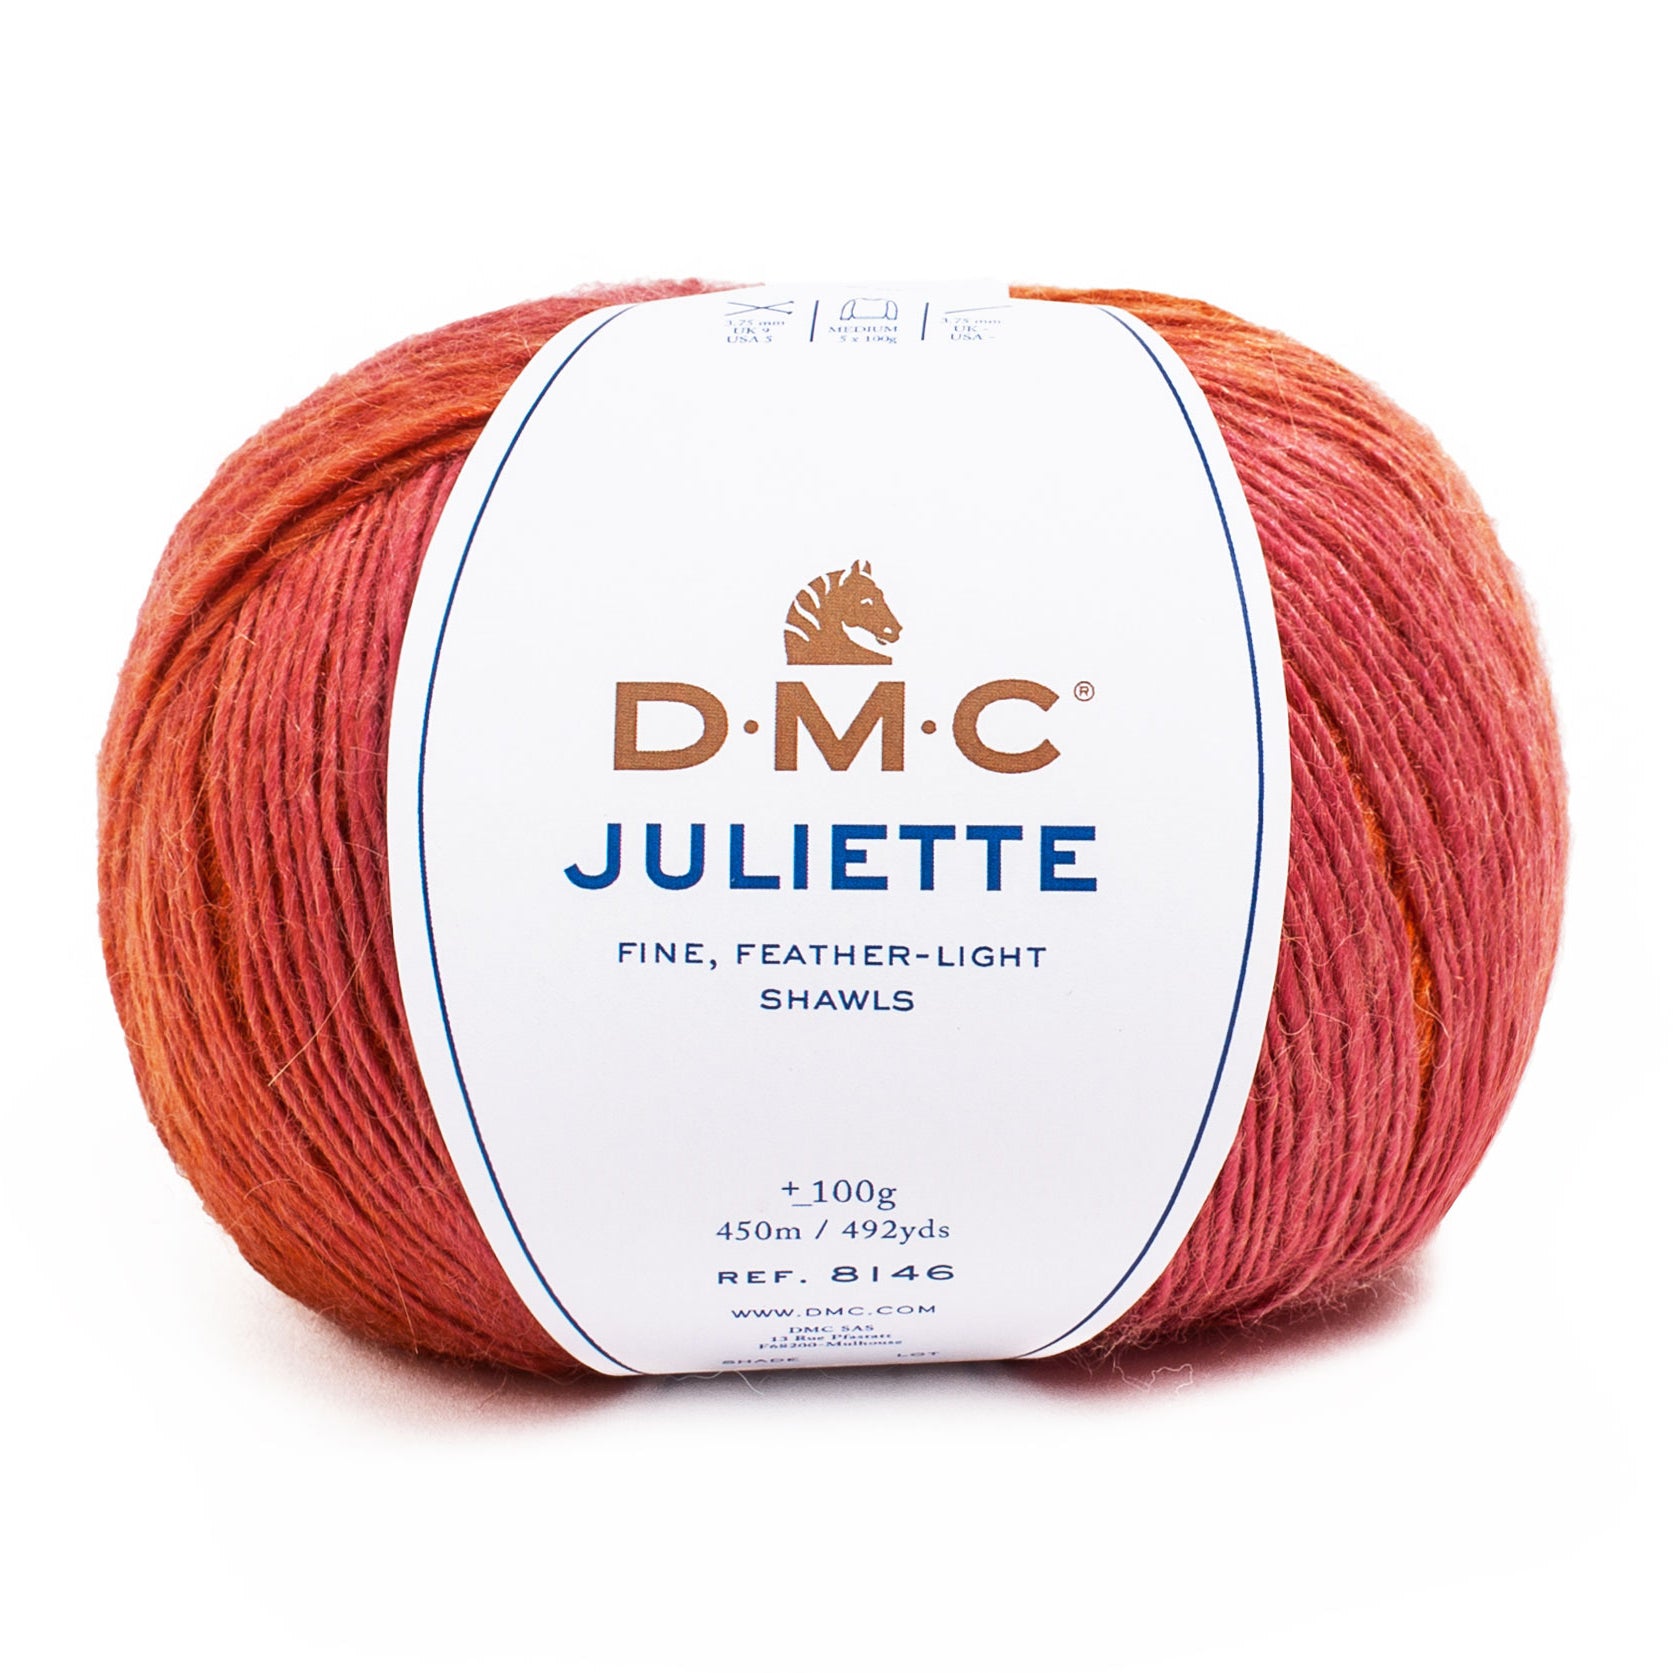 DMC Lana Juliette: Multicolor yarn perfect for soft shawls